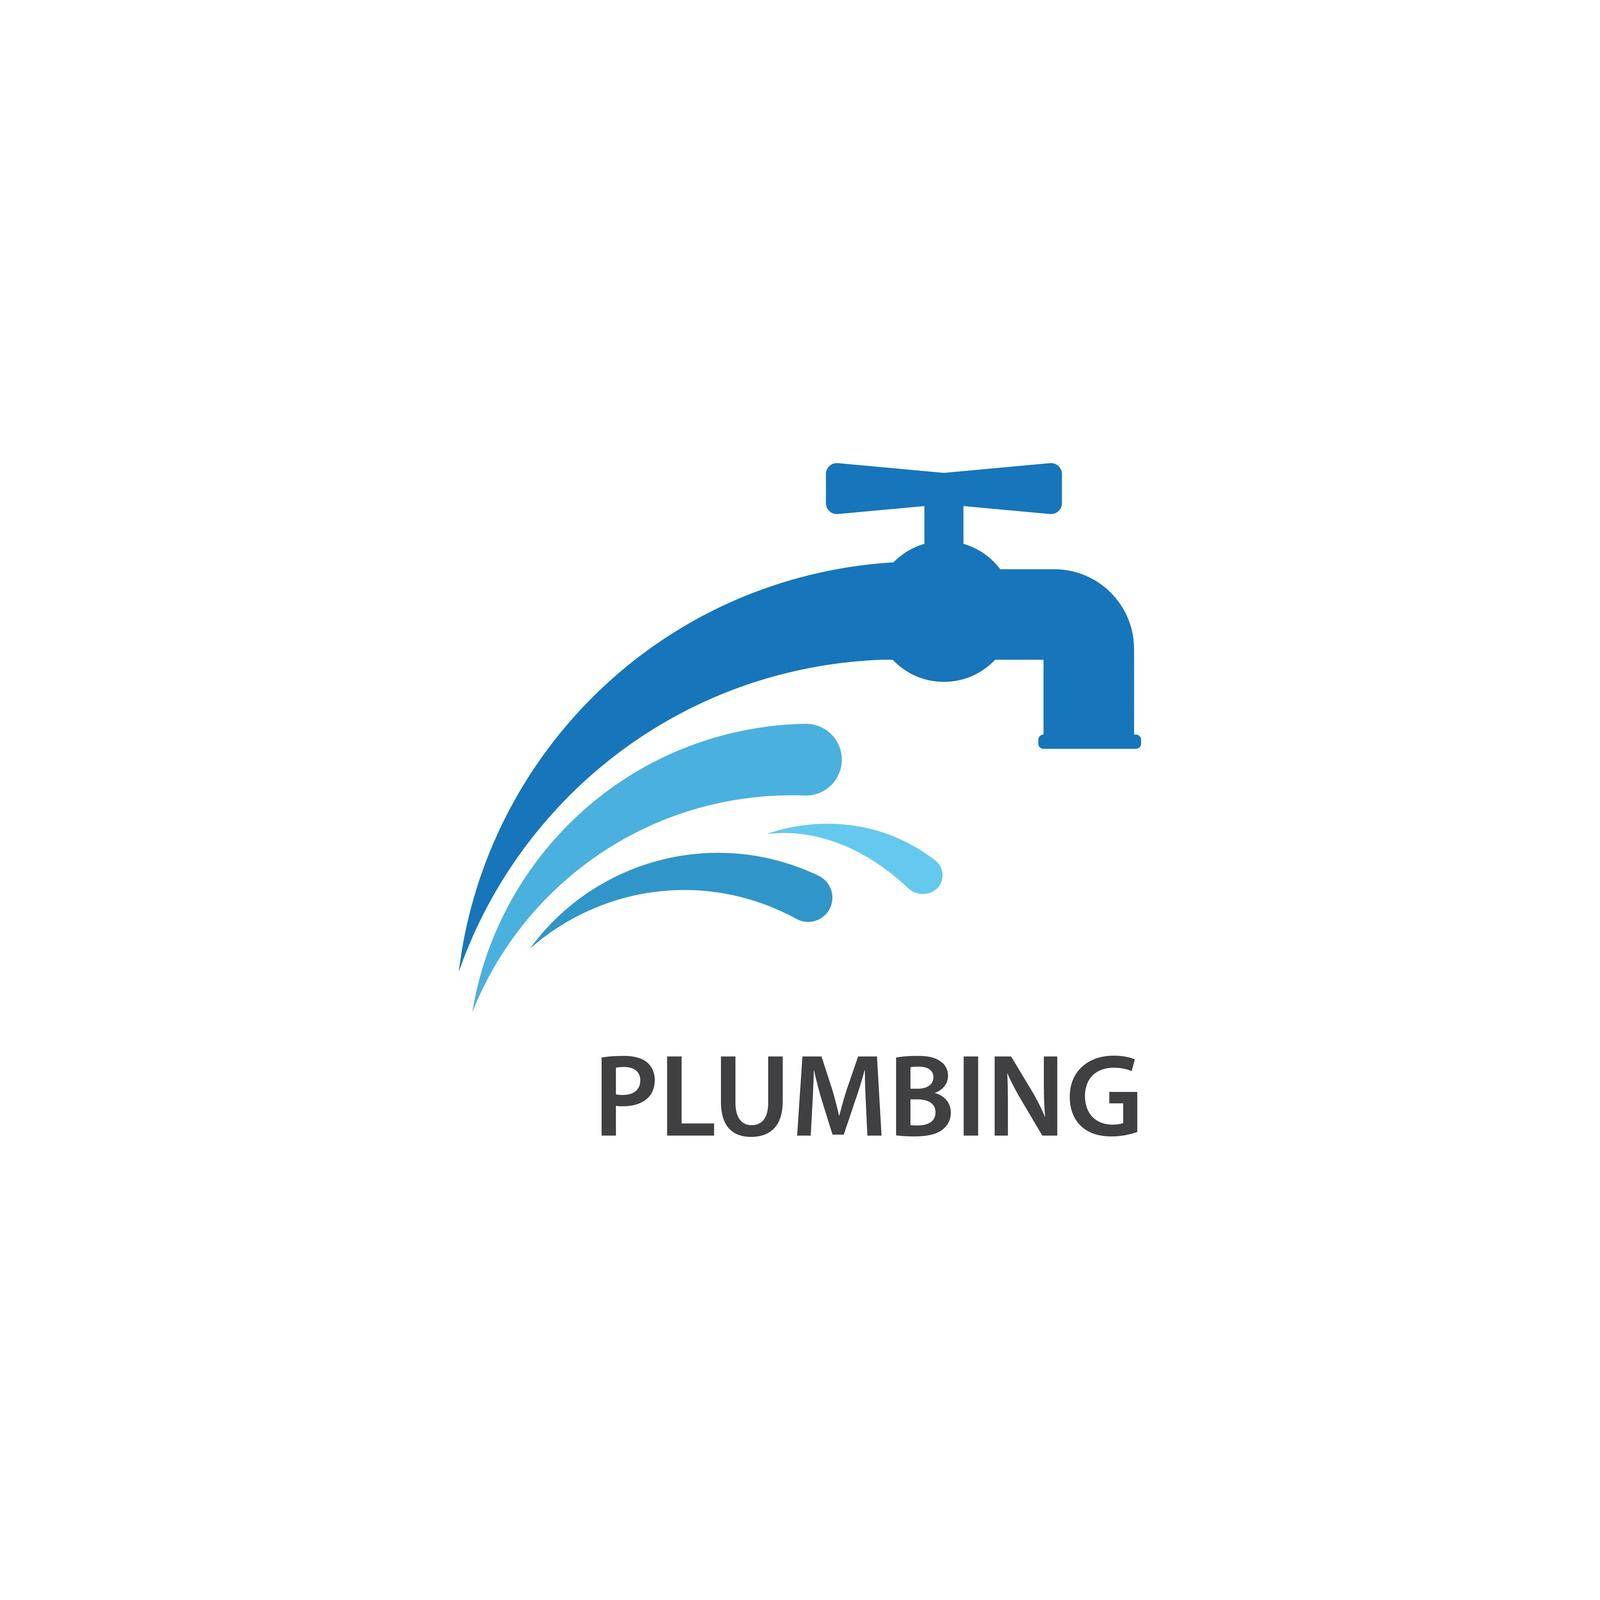 Plumbing symbol vector design business template